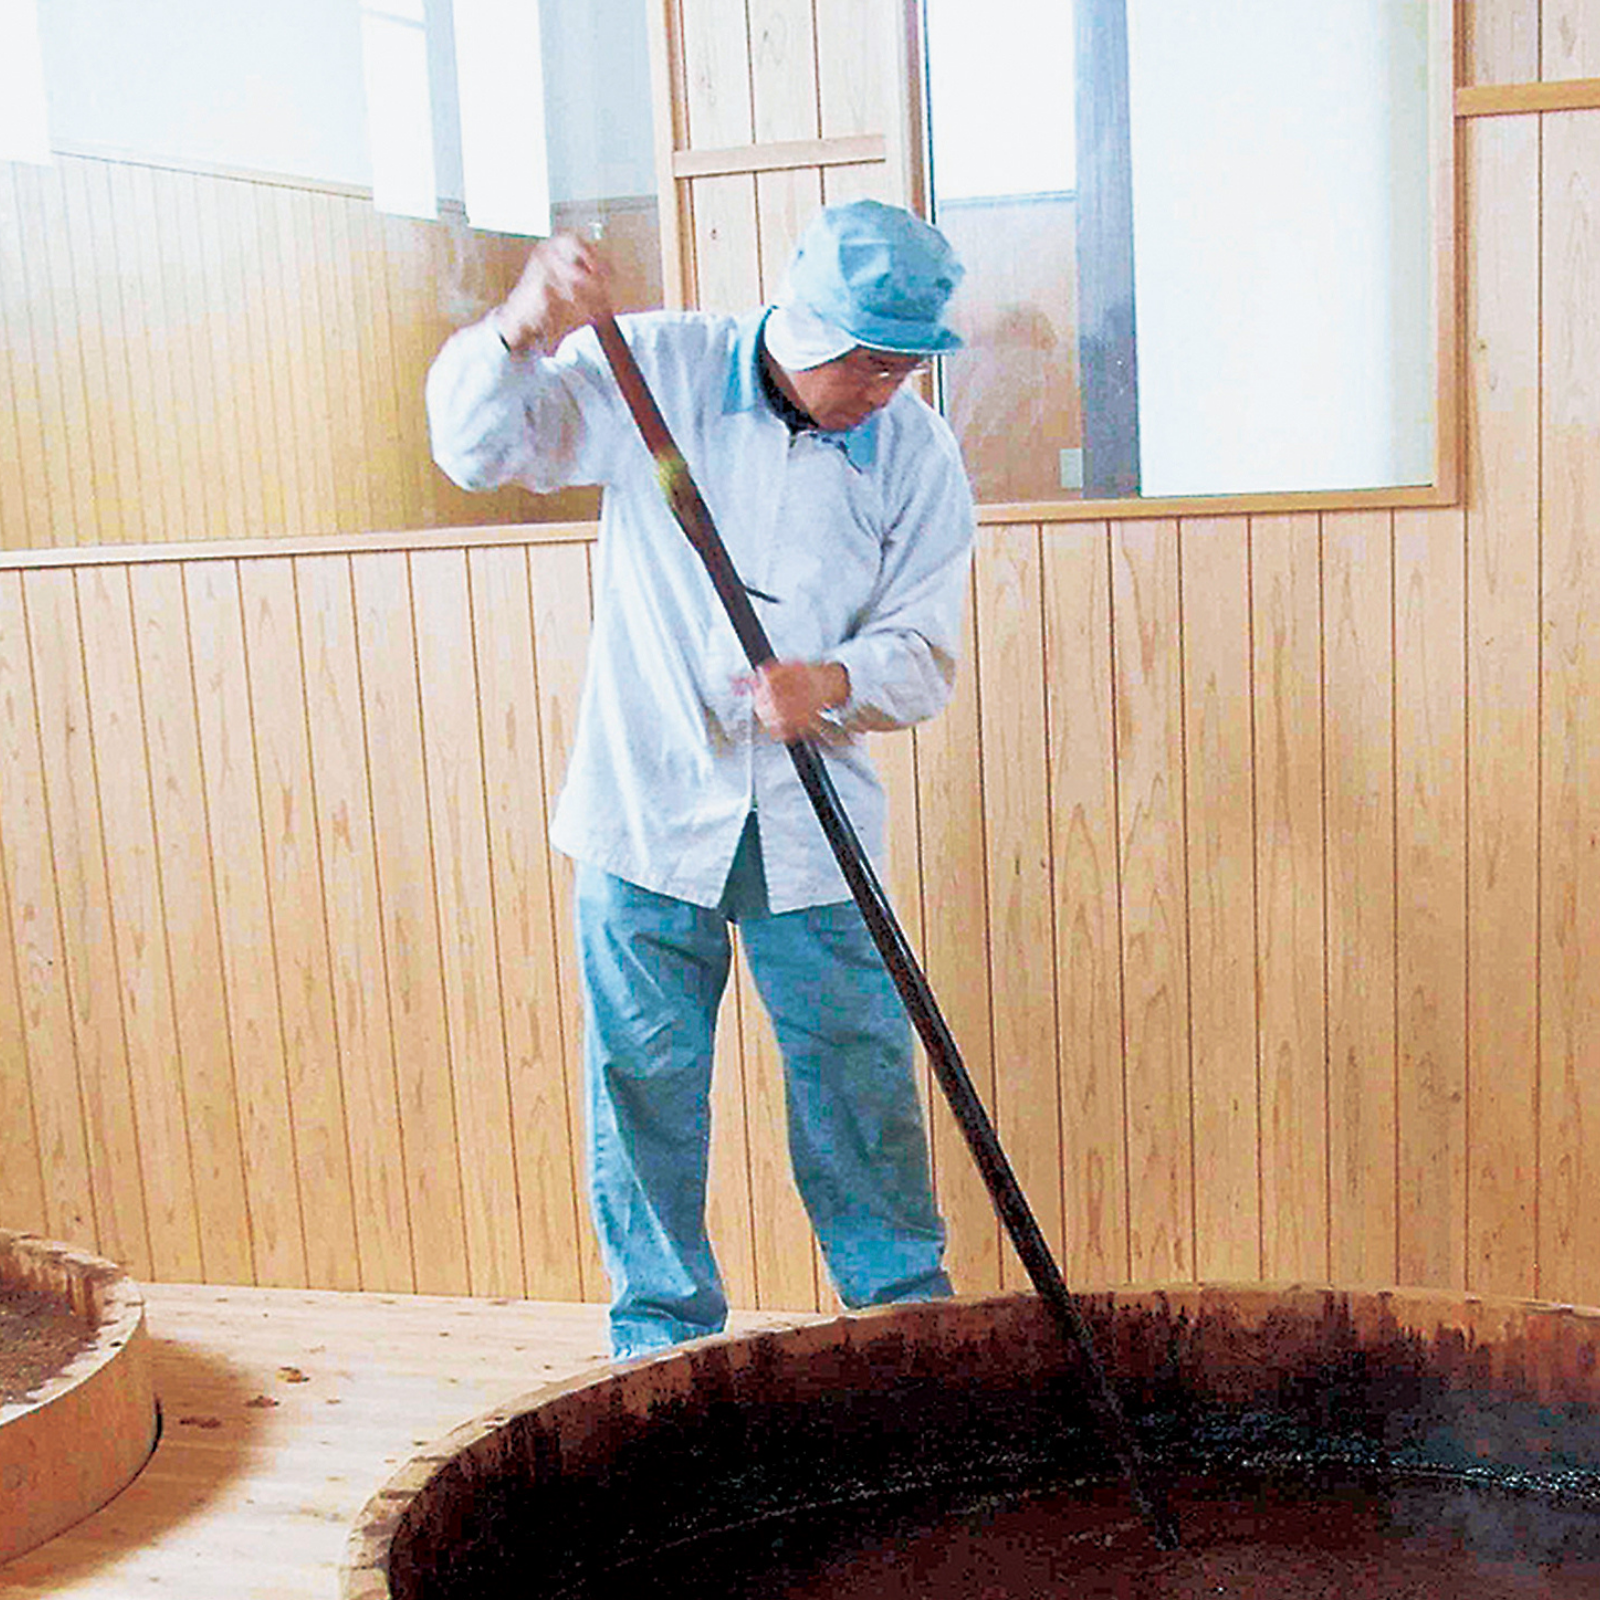 Craftsman stirring soy sauce in wooden barrel